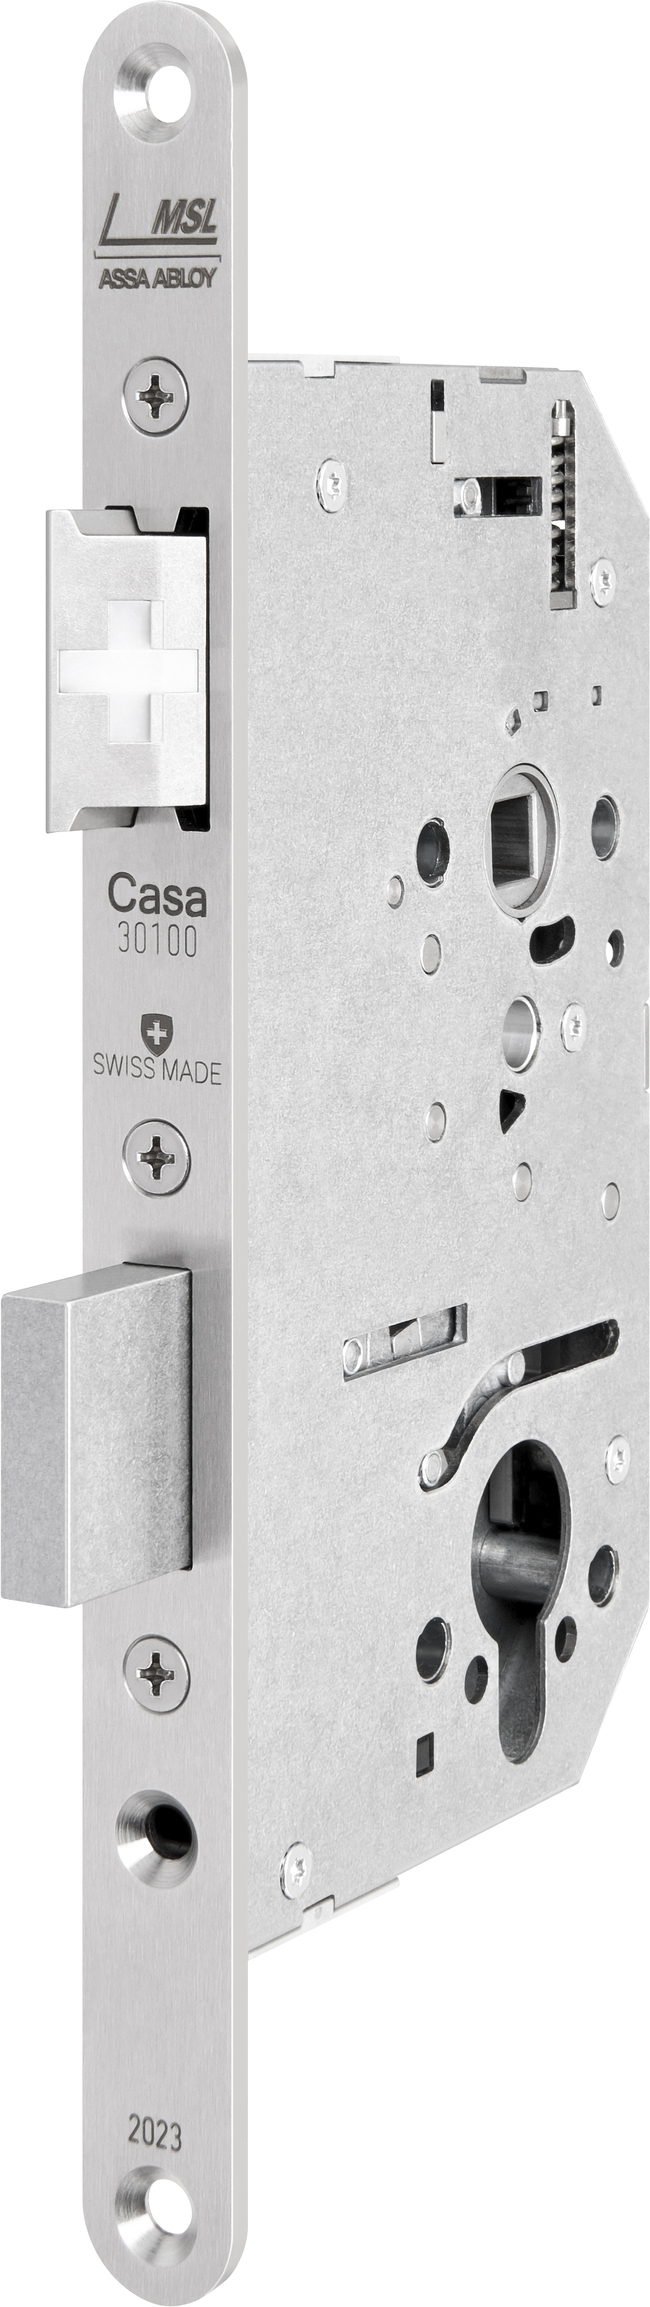 CASA Beta Security mortise lock 30100